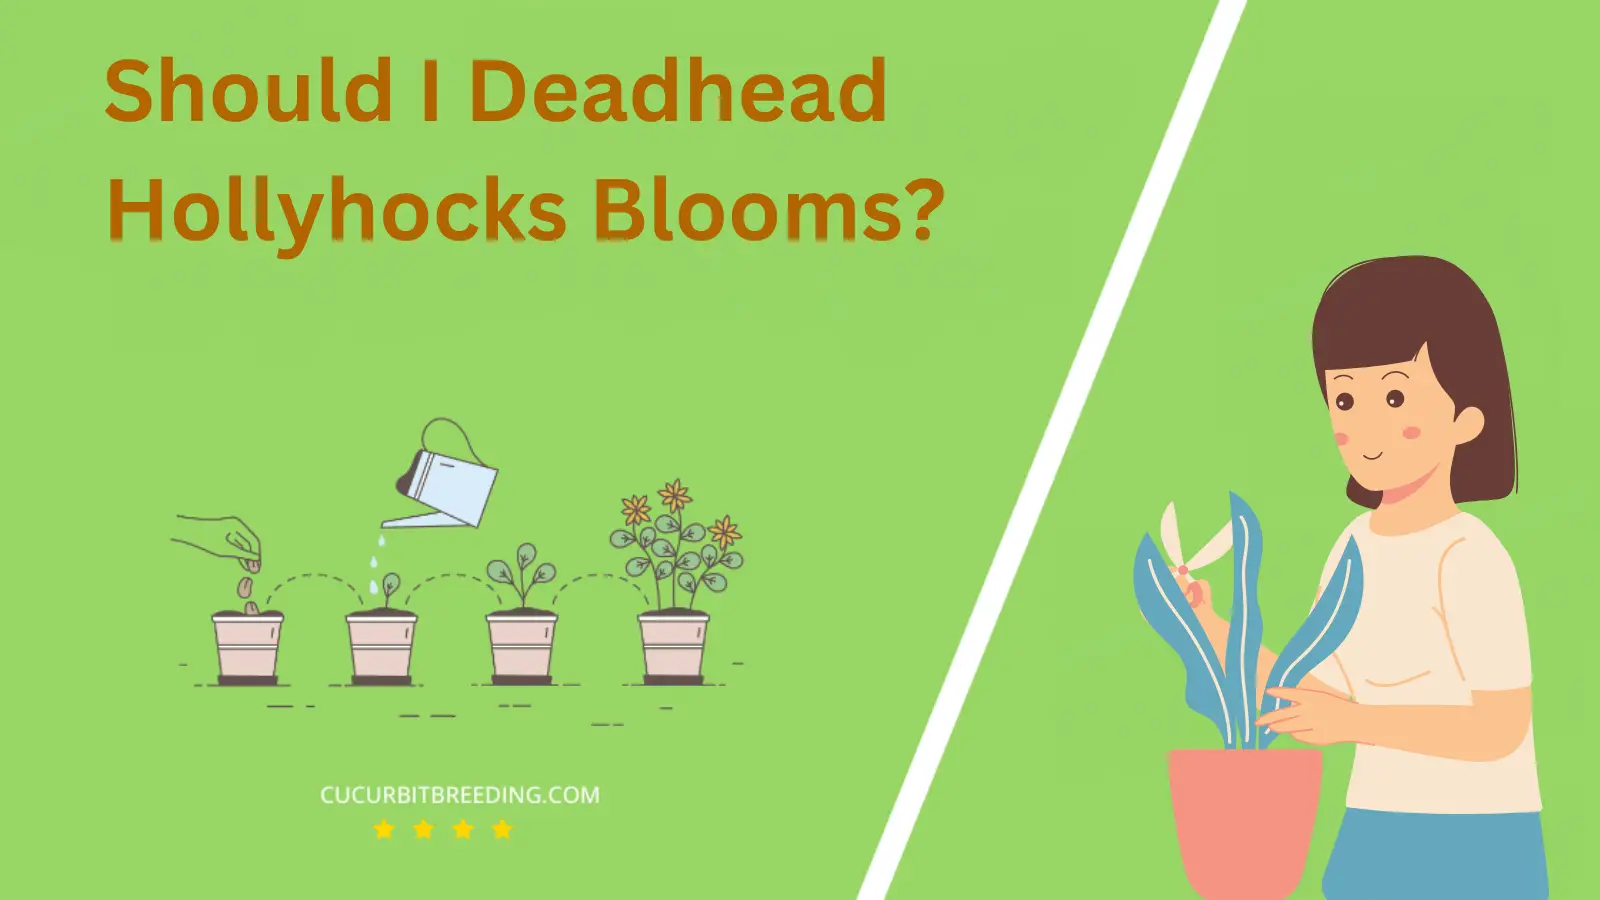 Should I Deadhead Hollyhocks Blooms?